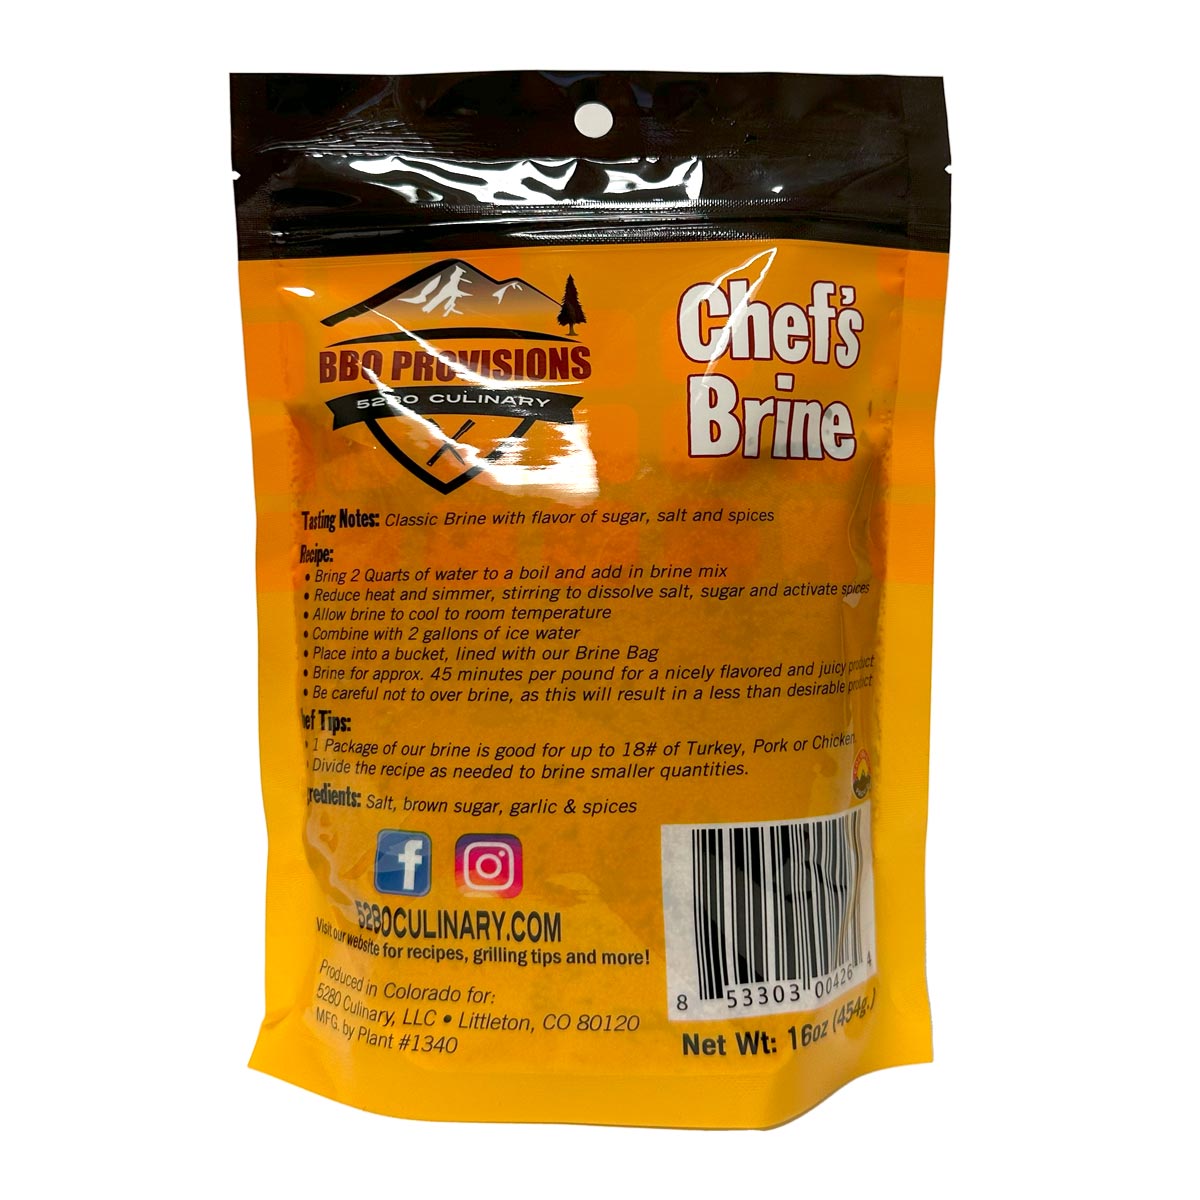 BBQ Provisions Chef's Brine Mix